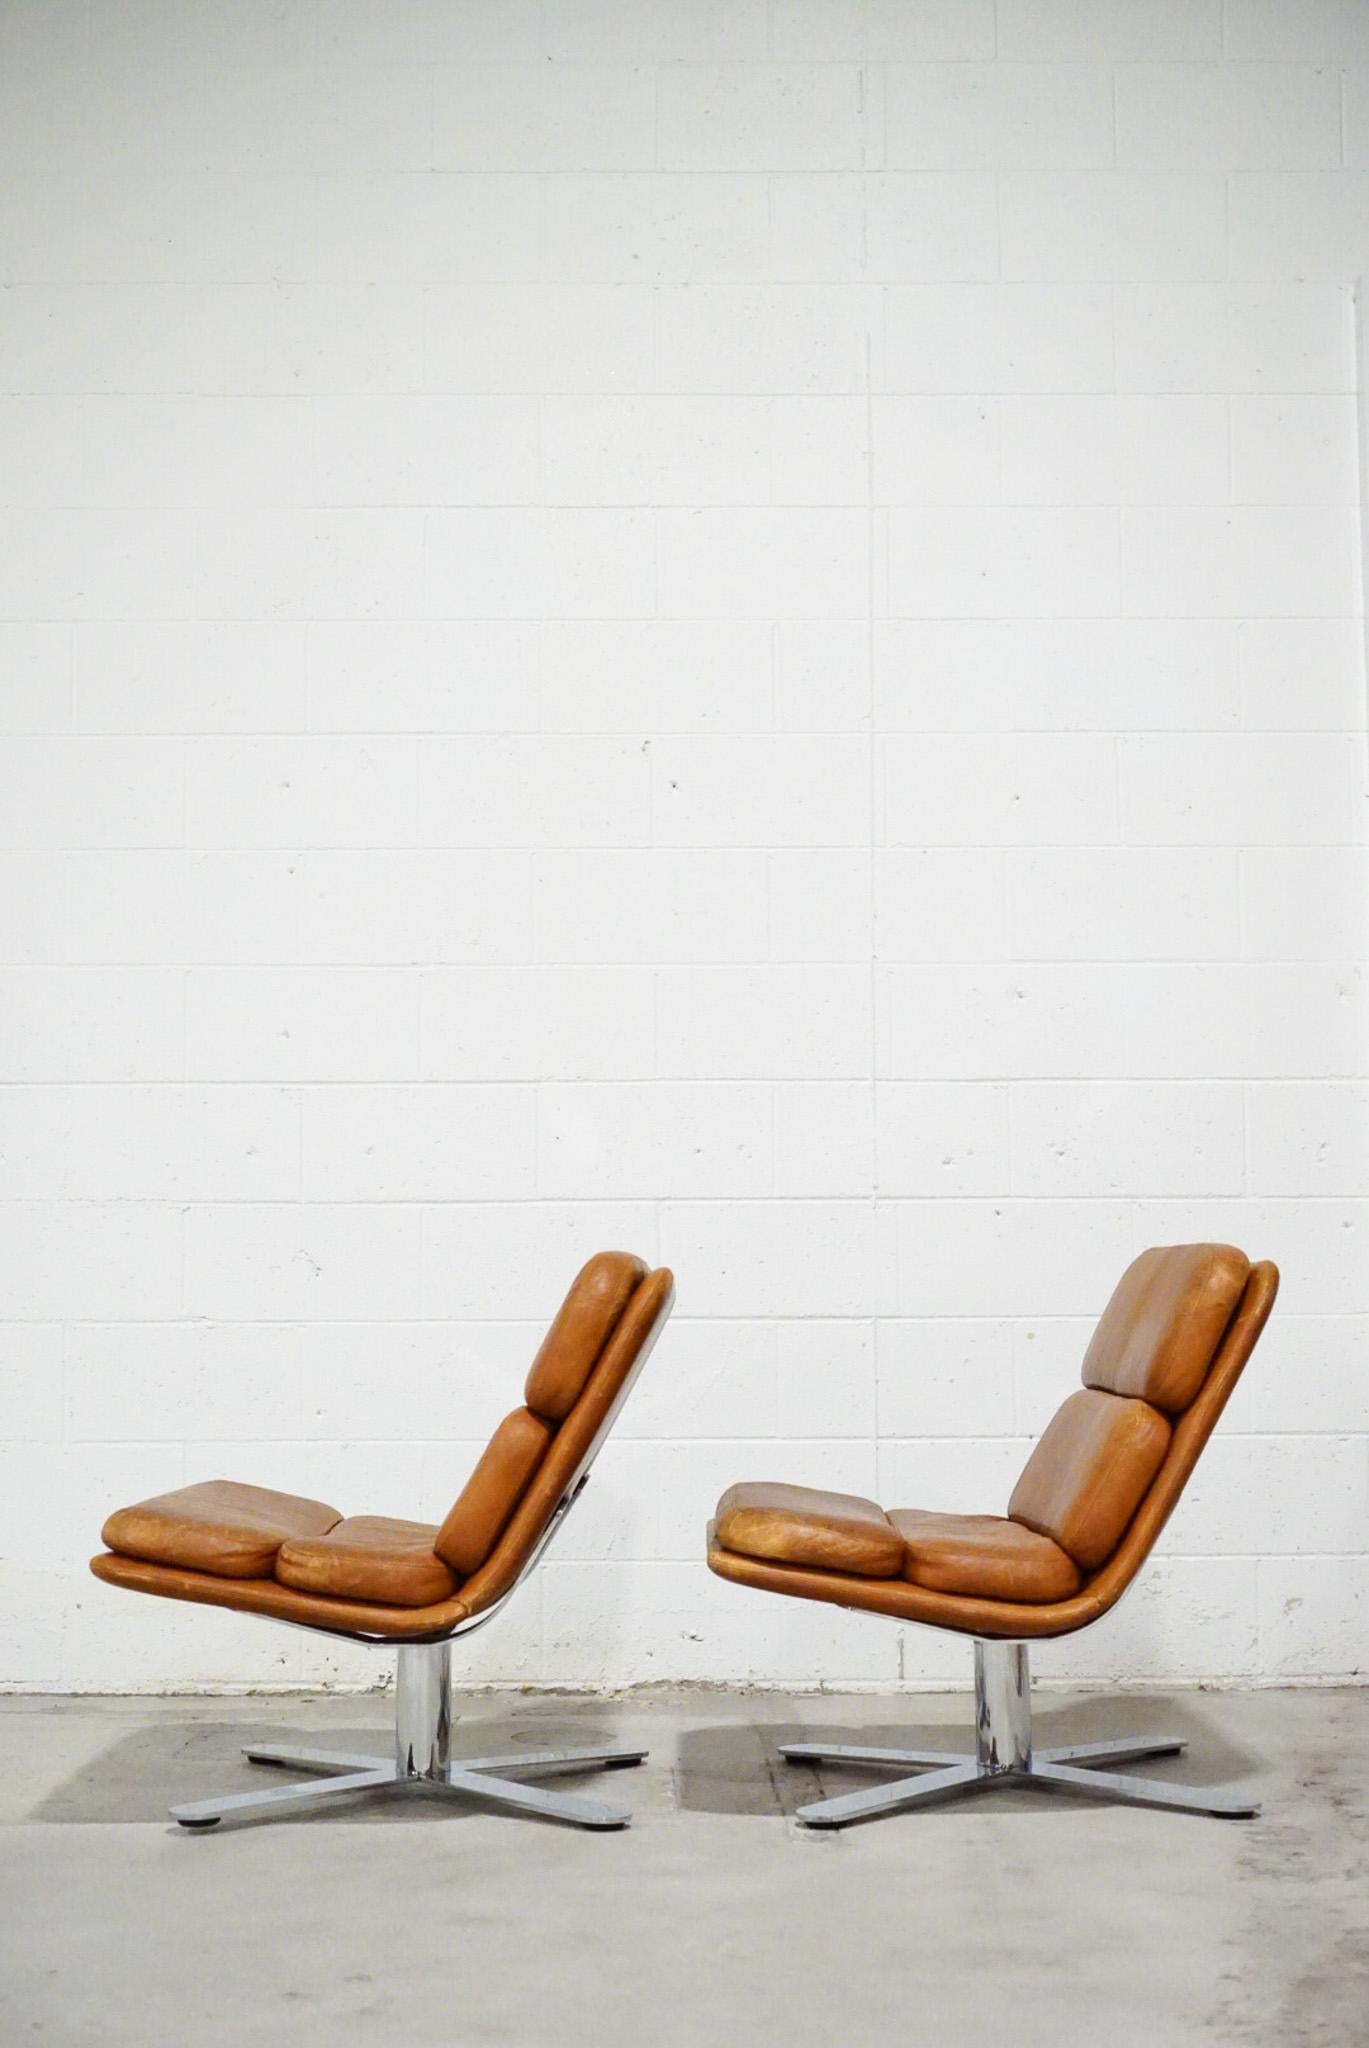 Post-Modern John Follis Pair of Patinated Leather Lounge Chairs, 1970s California